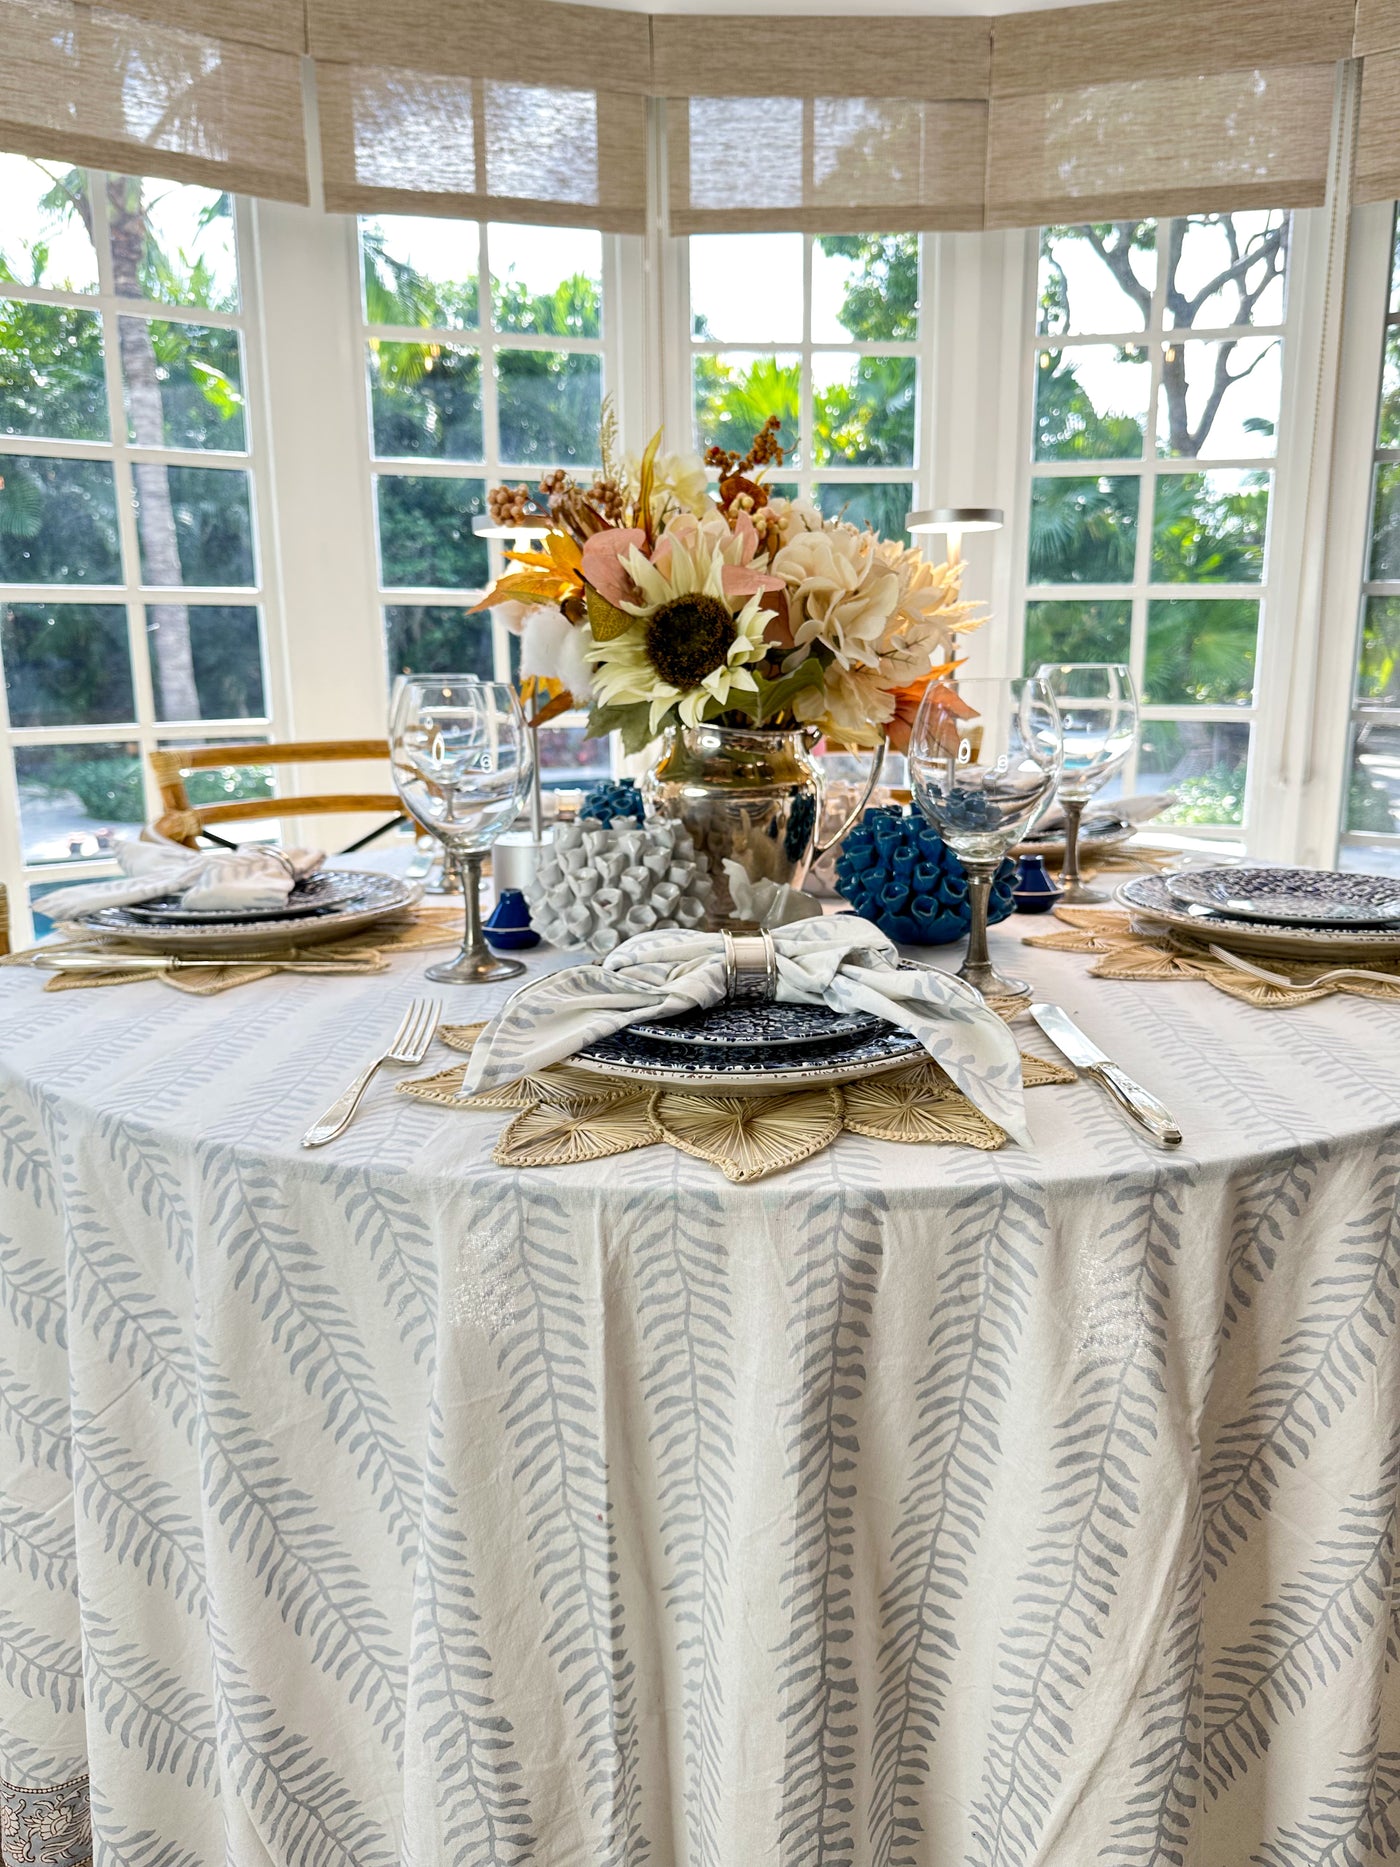 The Silver/Blue Trellis Tablecloth